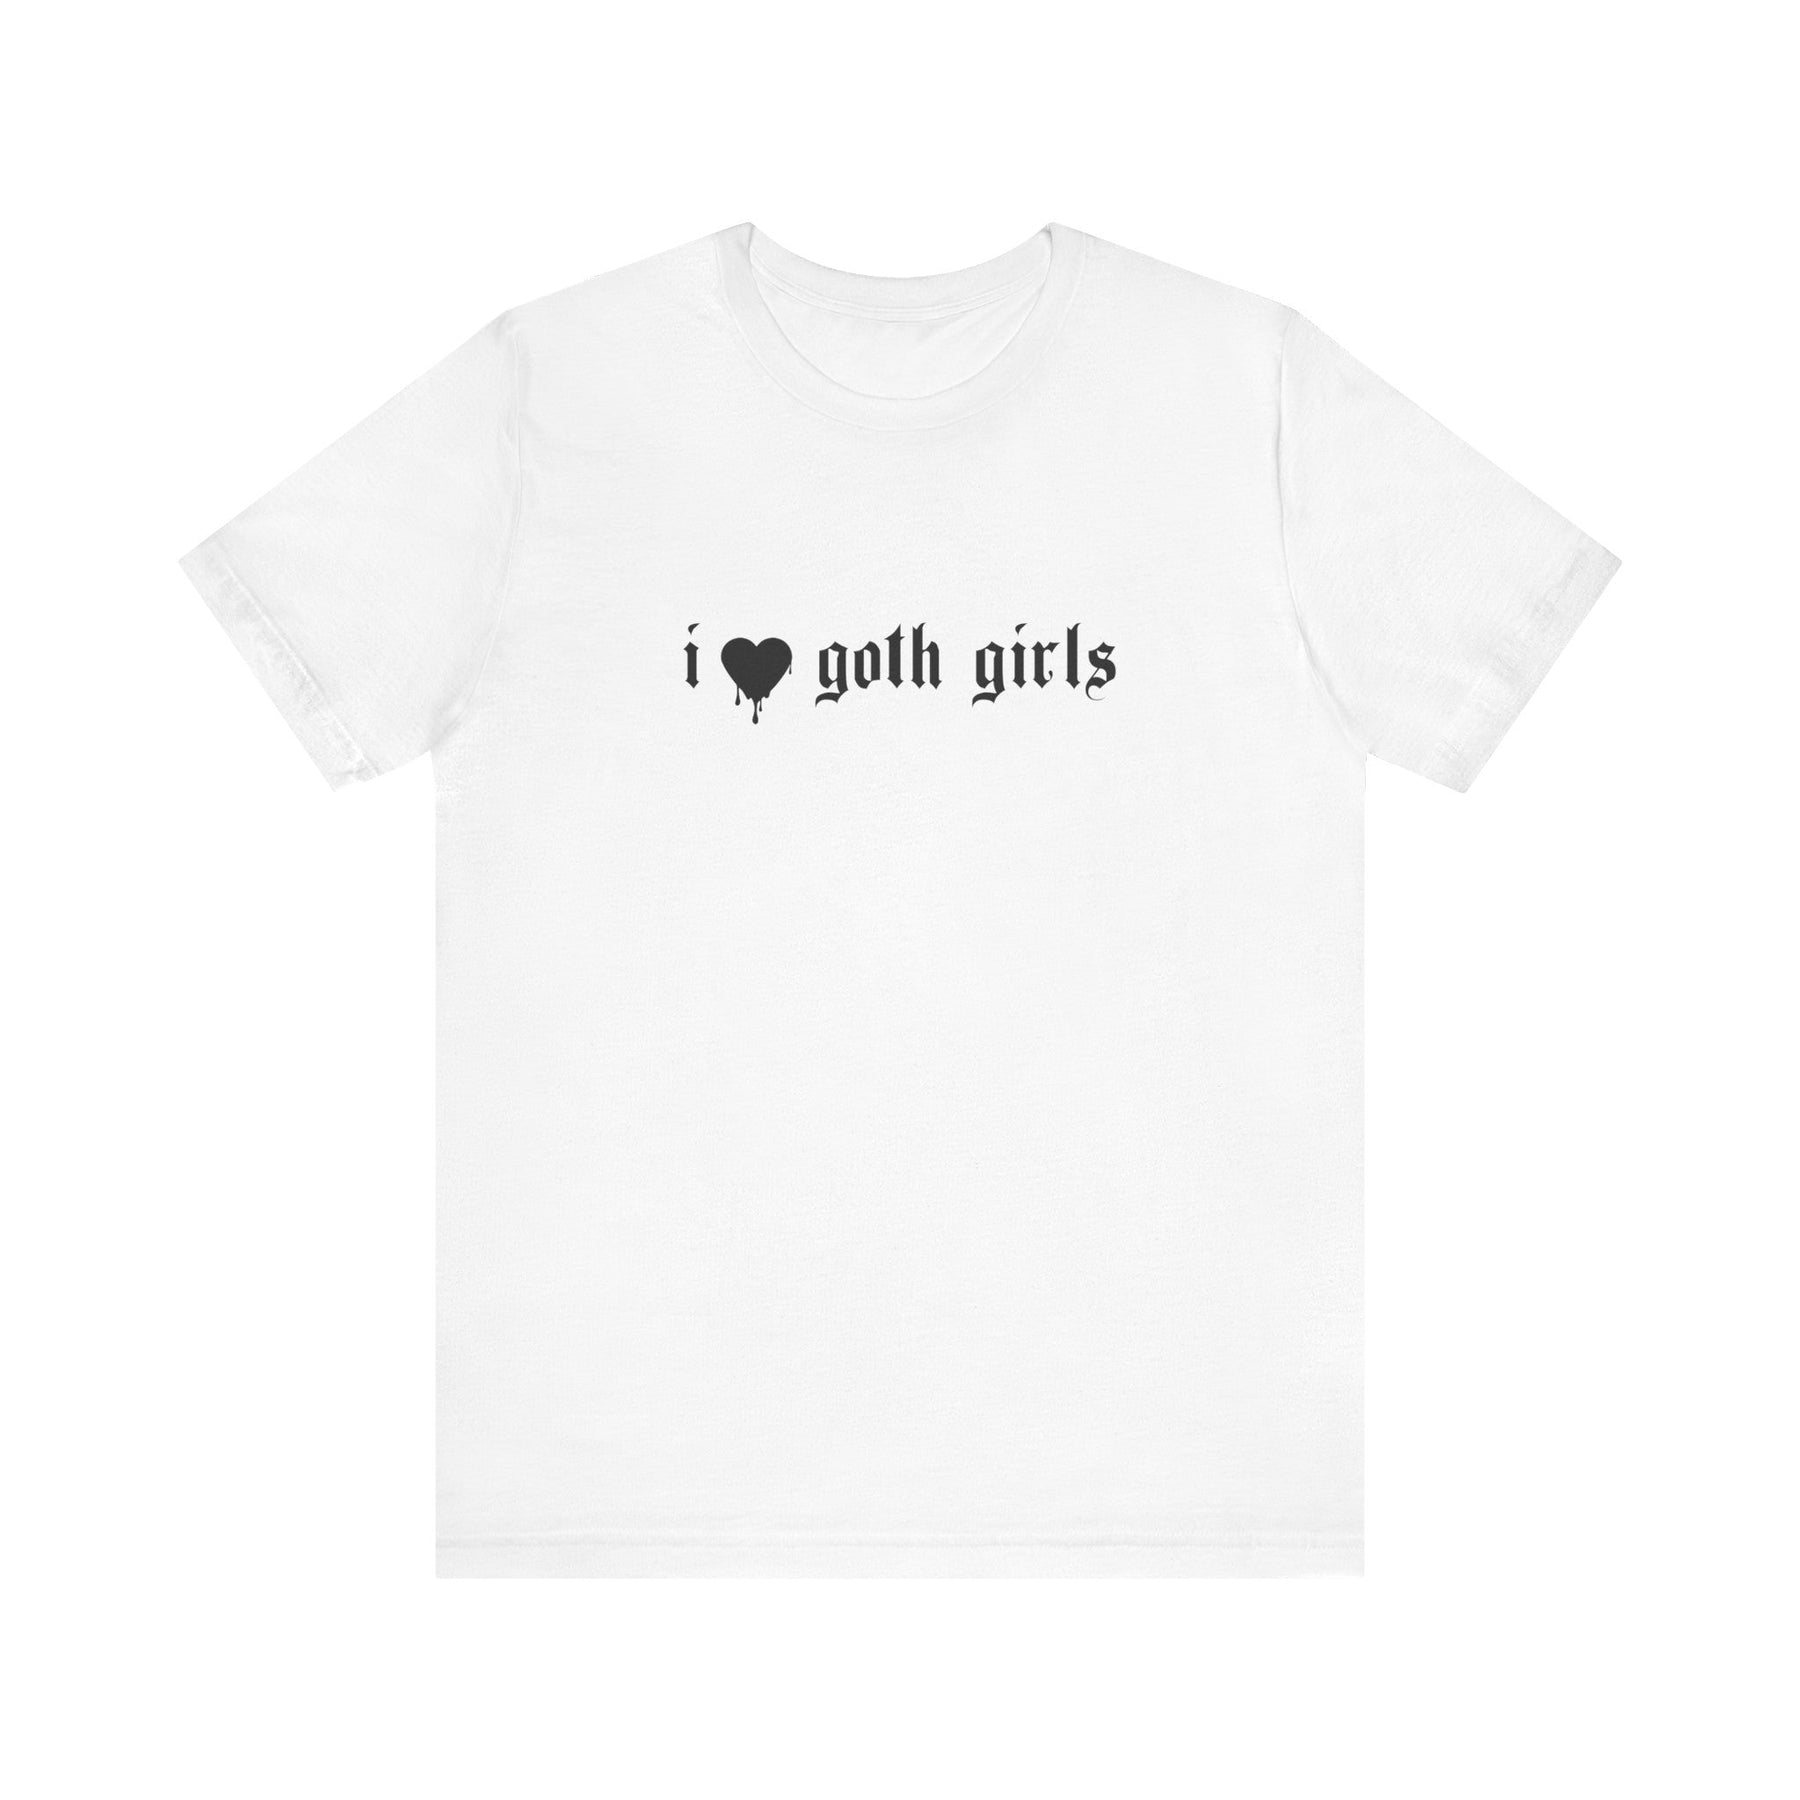 I Love Goth Girls T - Shirt - Goth Cloth Co.T - Shirt13858632097213877495